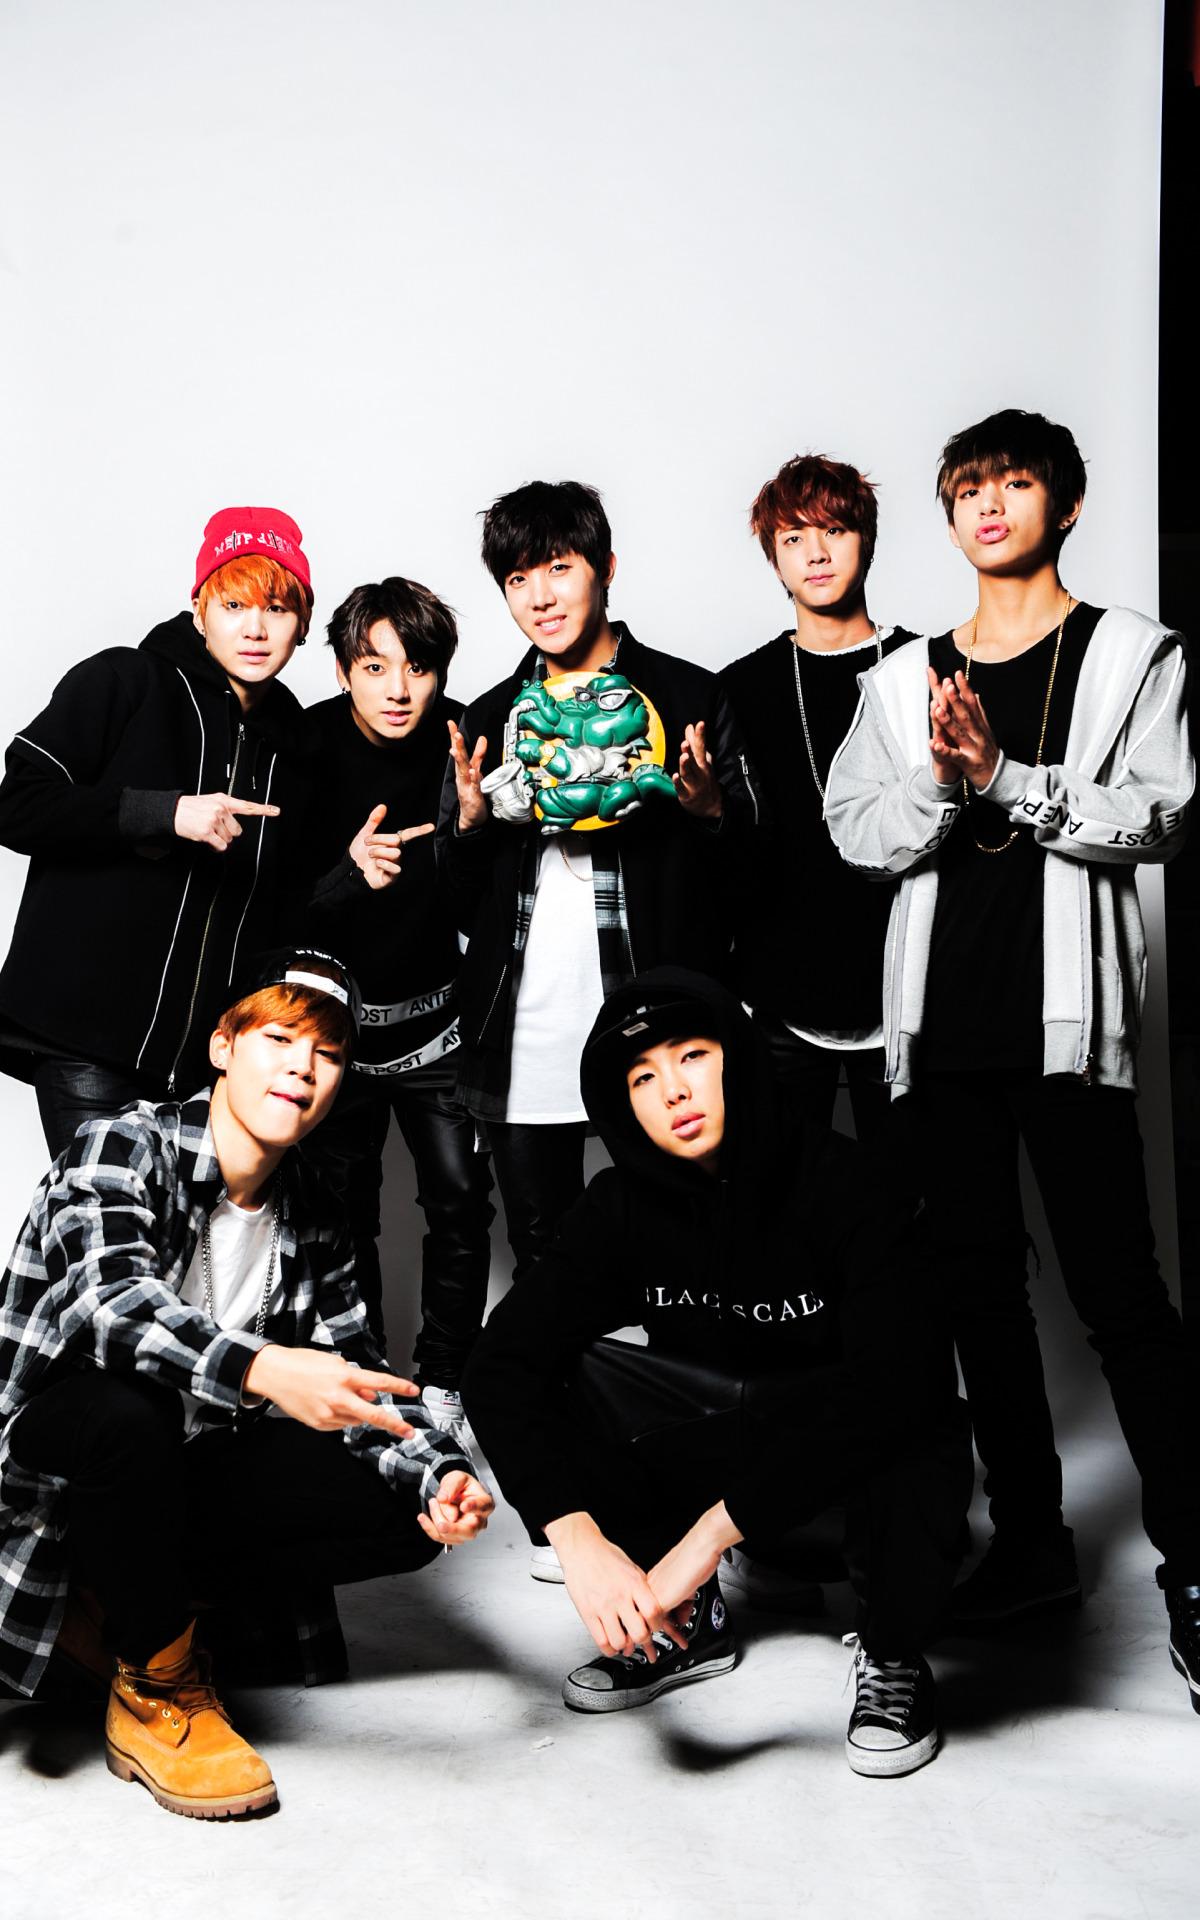 Wallpaper Picture Photo: BTS Wallpaper Full HD Kpop